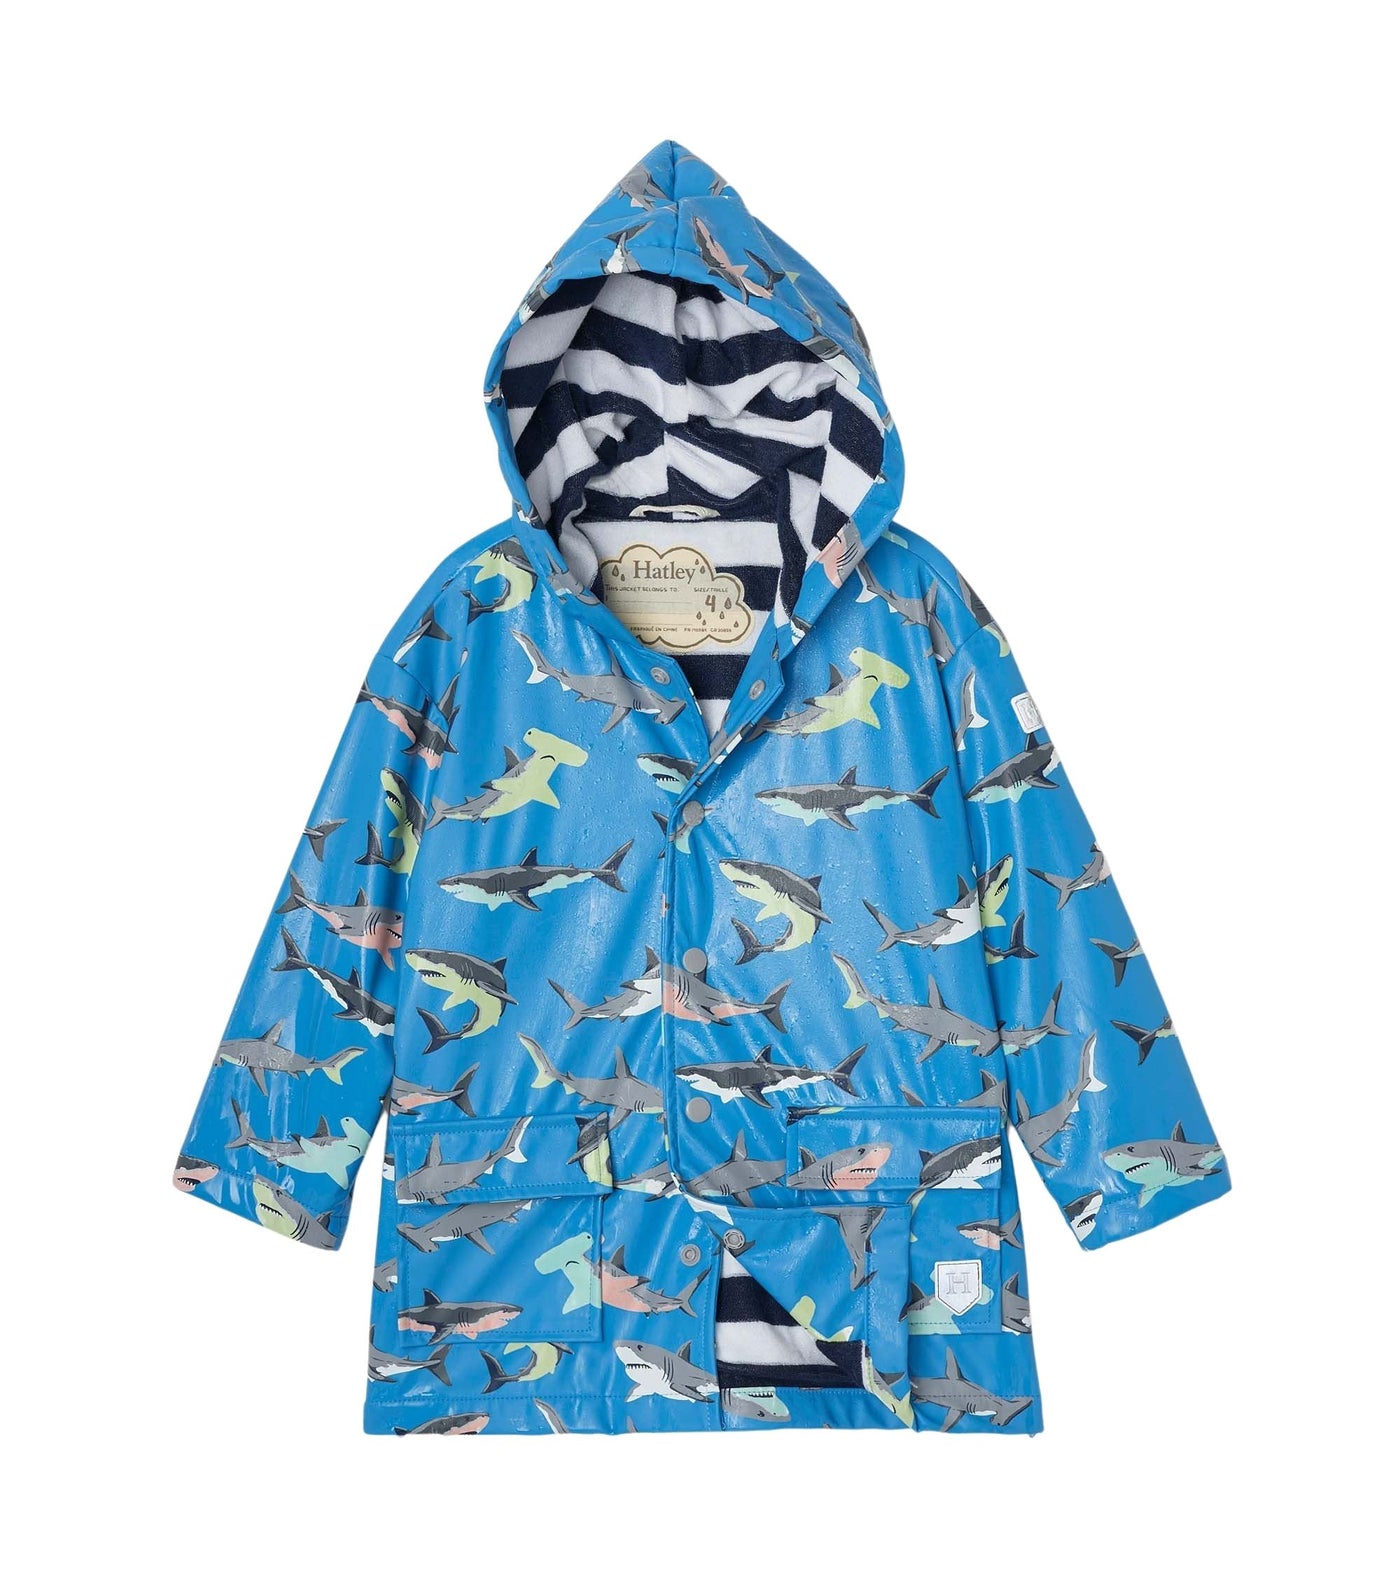 Hatley Kids Colour Changing Raincoat - Deep-Sea Sharks